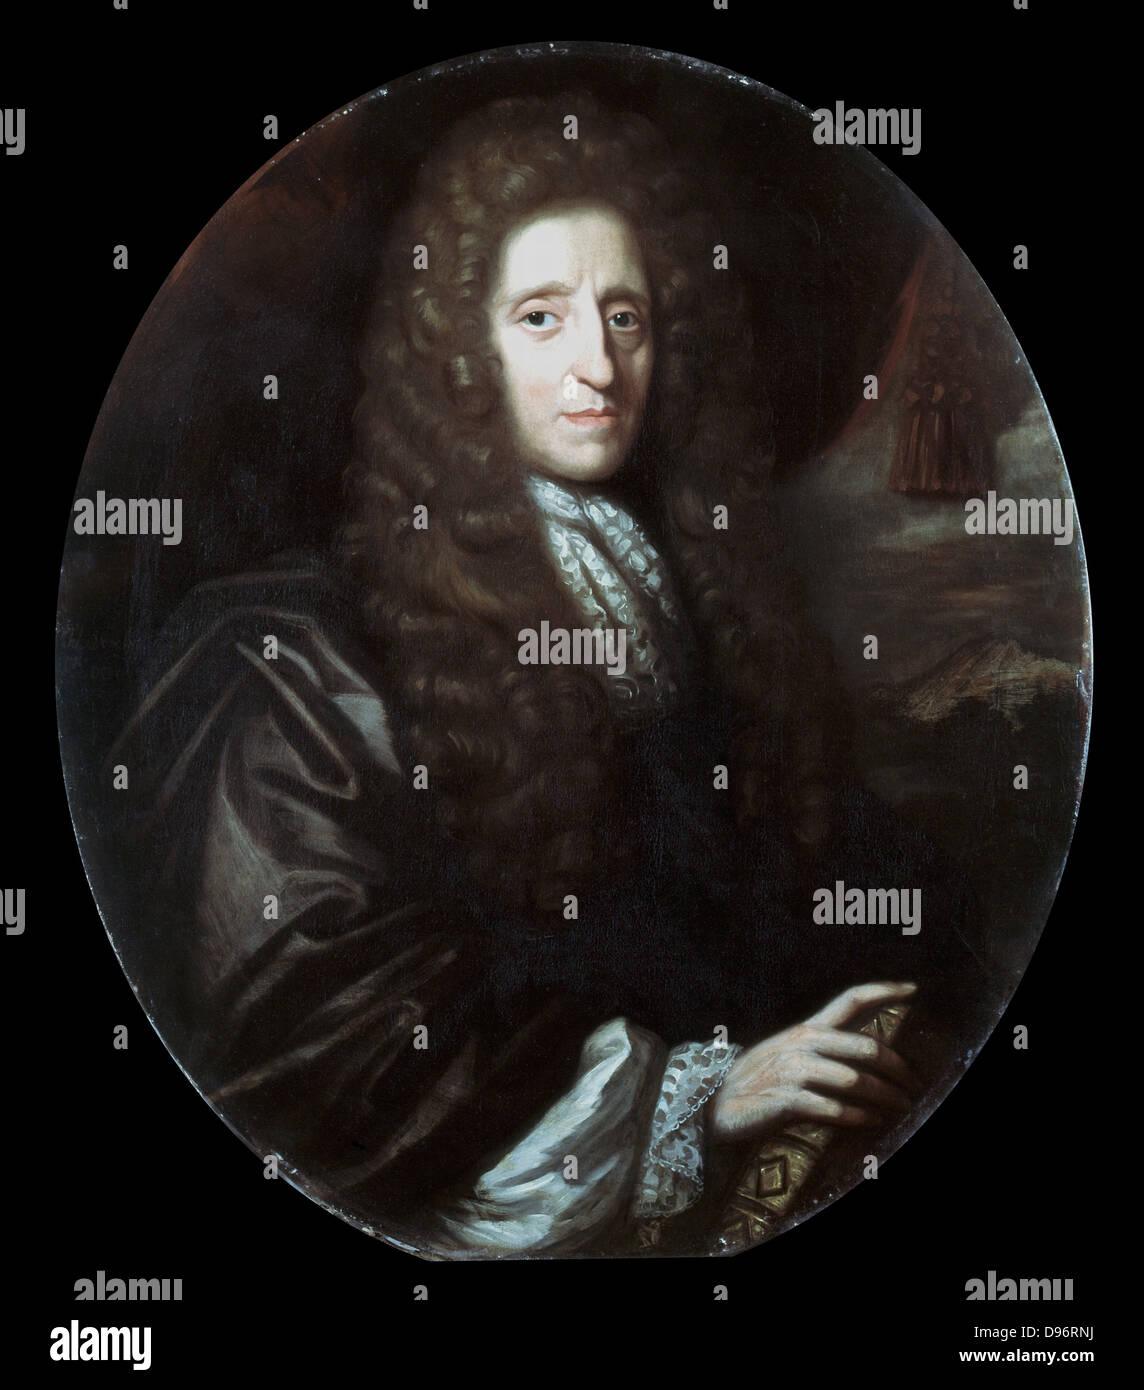 John Locke (1632-1704) filósofo inglés. Autor de "Ensayo sobre el entendimiento humano" (1690). Óleo sobre lienzo: Herman Verelst 1689. Foto de stock